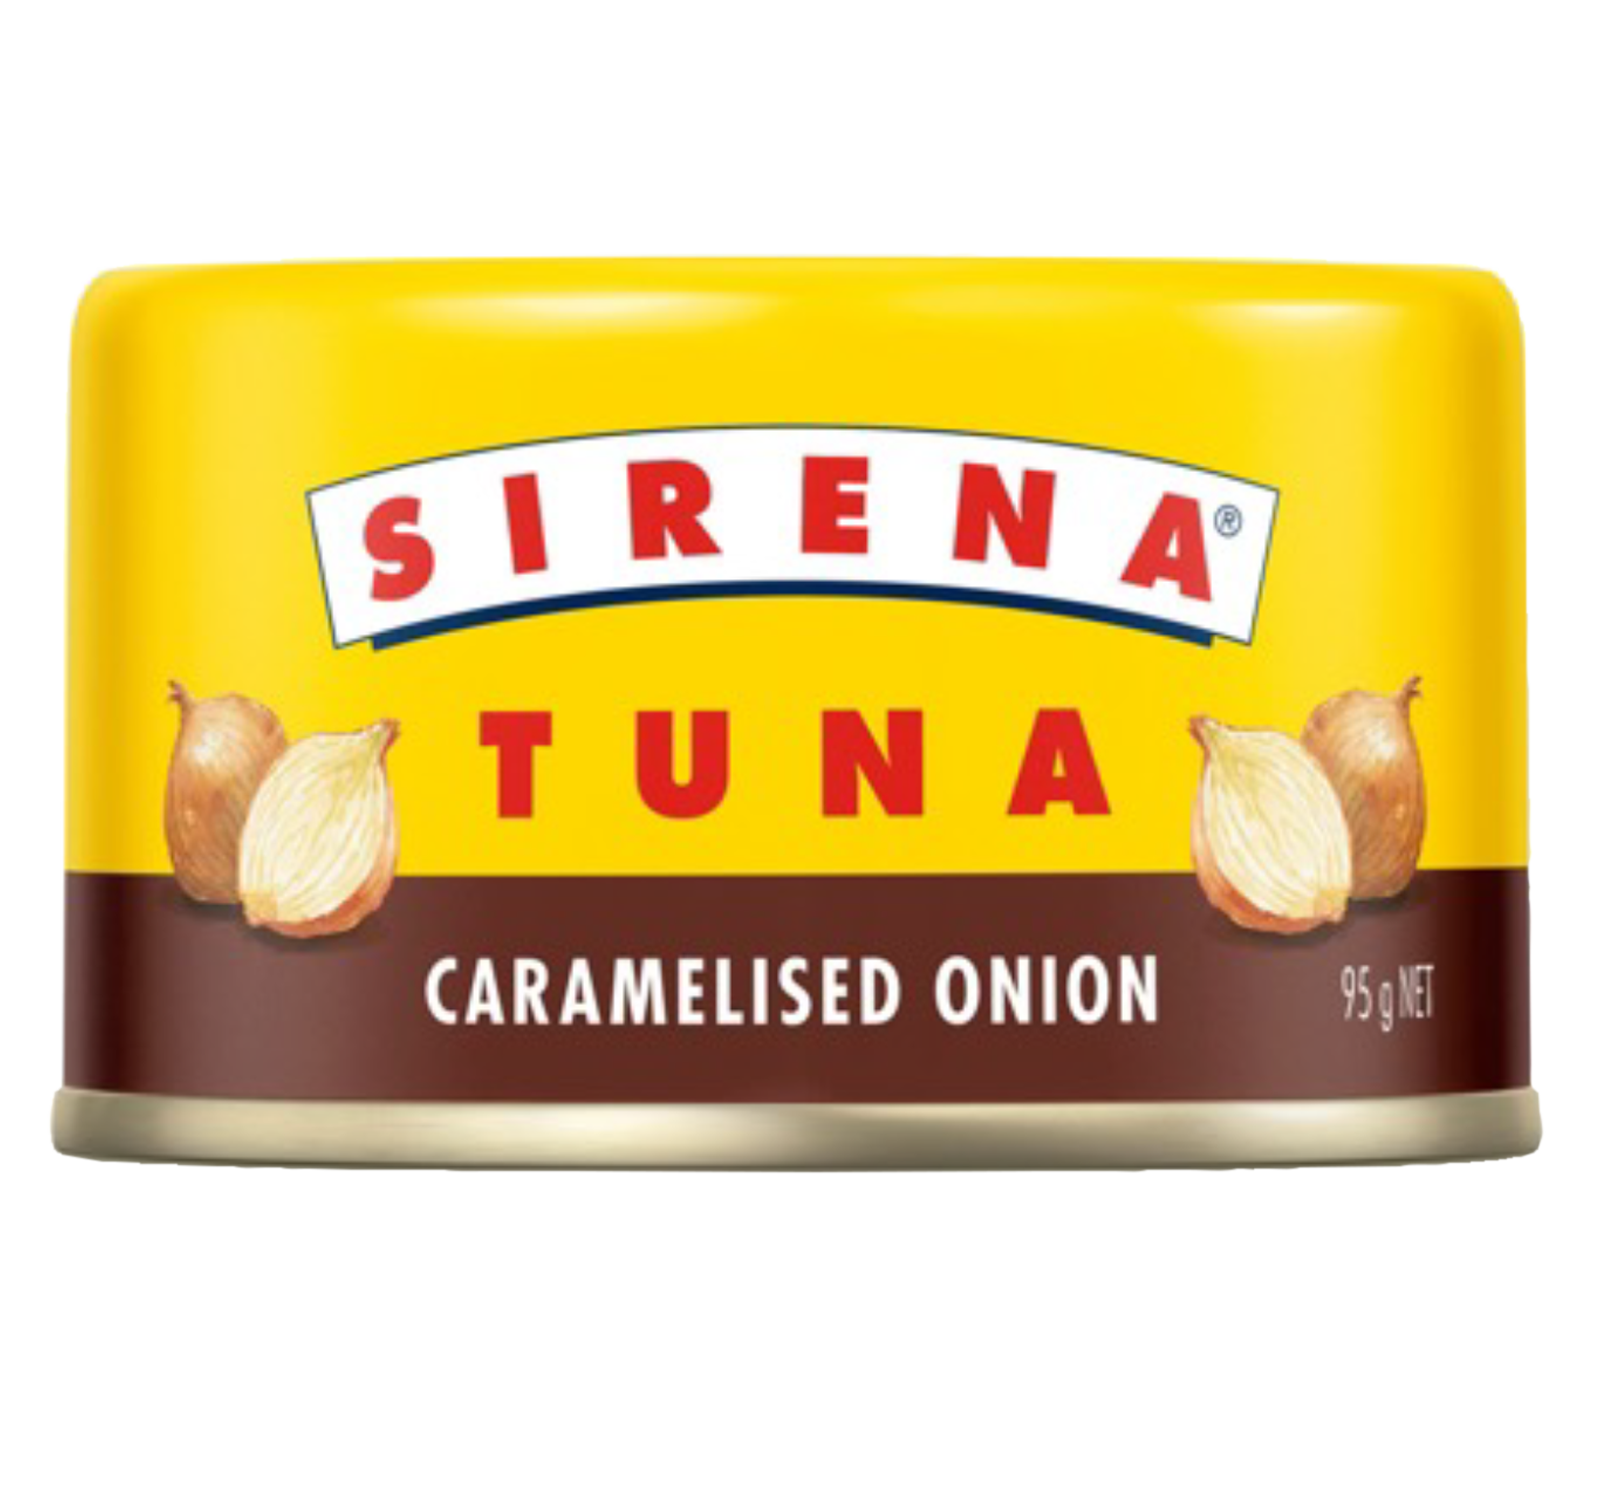 Tuna 95g - Caramelised Onion.png